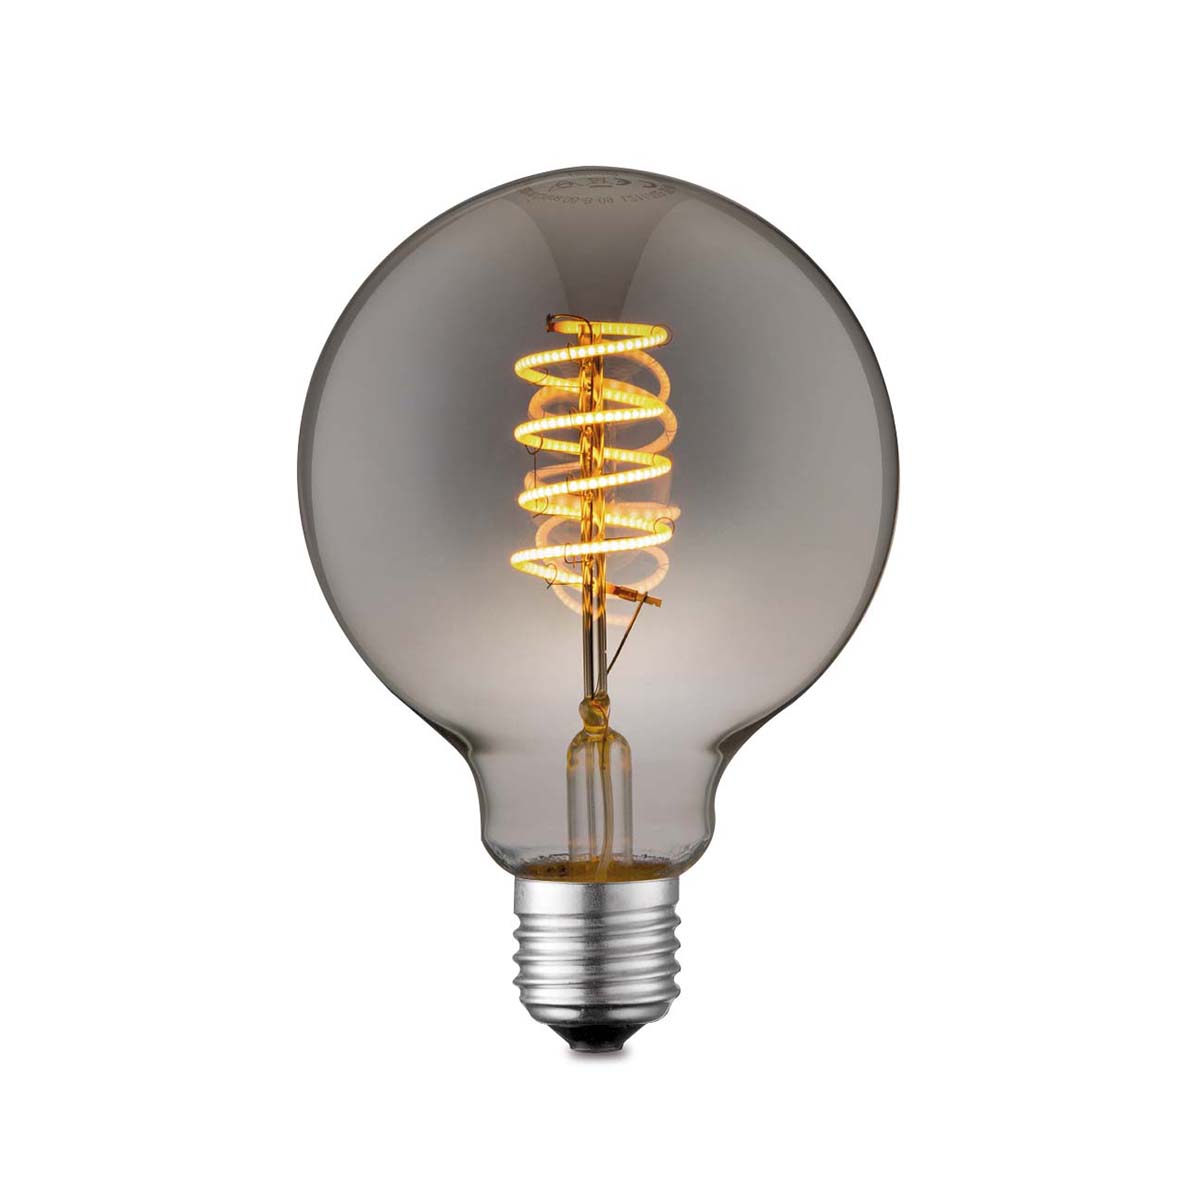 Tangla lighting - TLB-8007-04SM - LED Light Bulb Double Spiral filament - G80 4W smoke - dimmable - E27